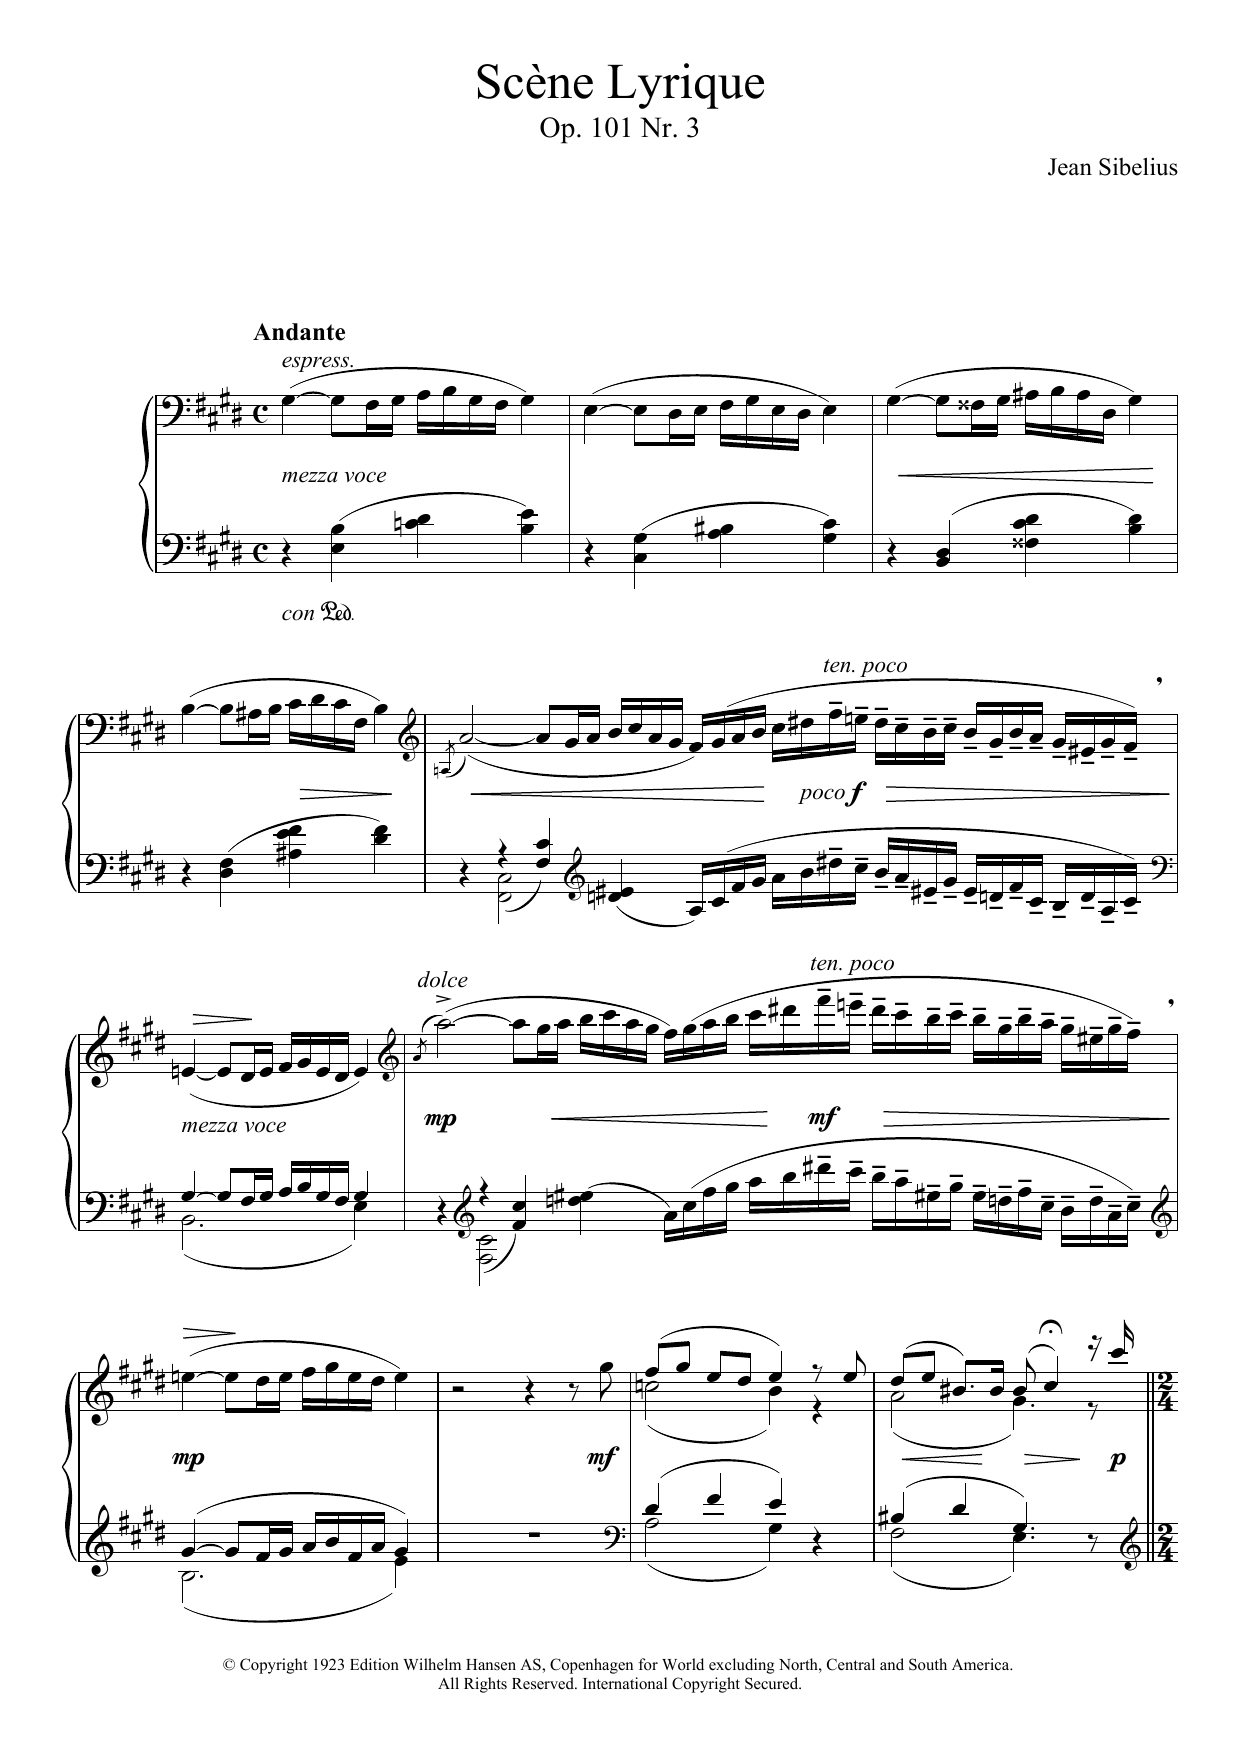 Jean Sibelius 5 Morceaux Romantiques, Op.101 - III. Scene Lyrique Sheet Music Notes & Chords for Piano - Download or Print PDF